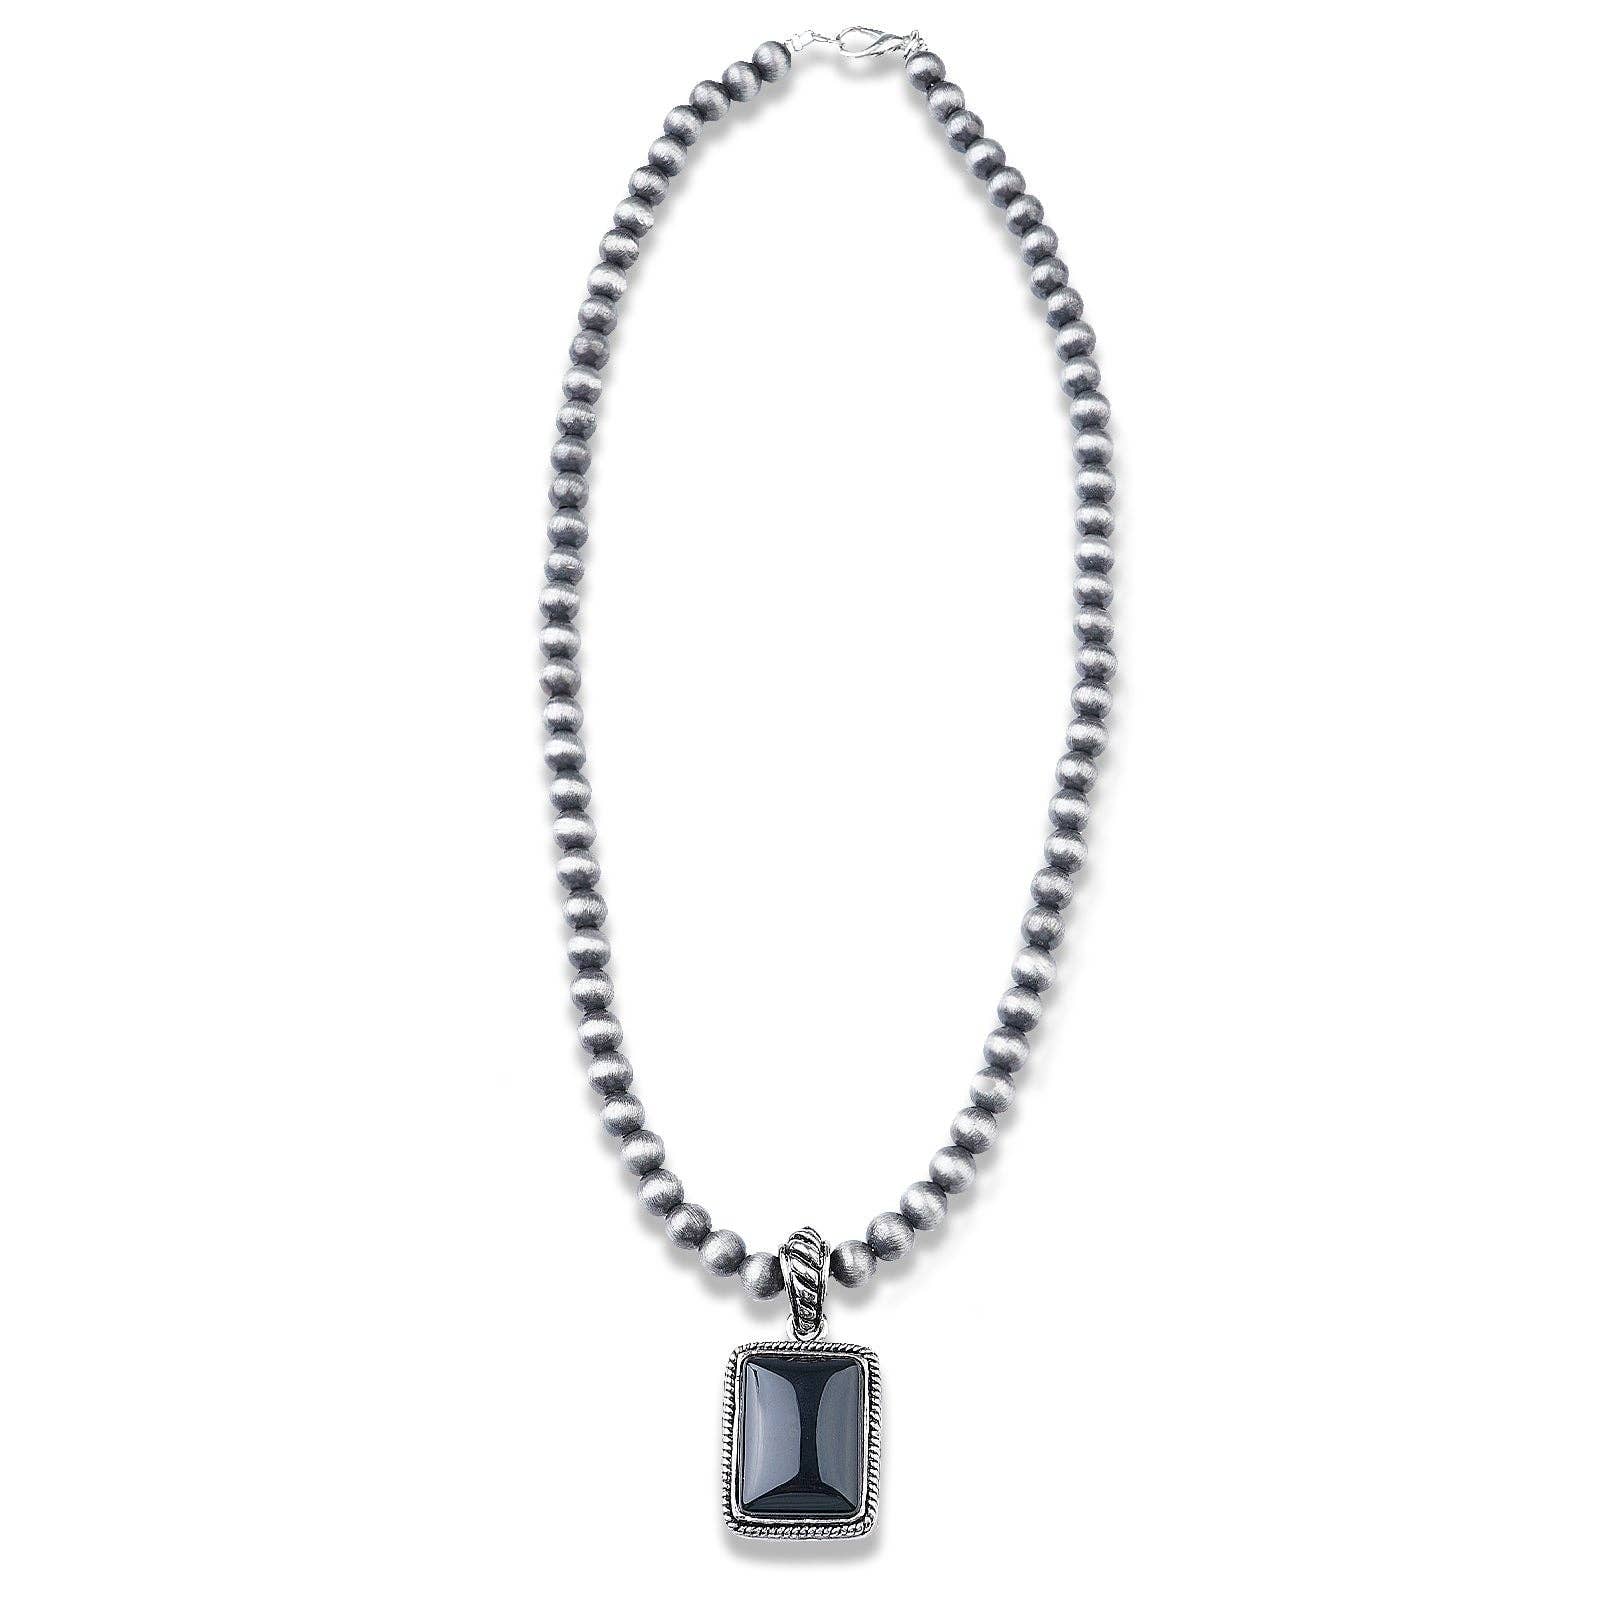 NK070112-06 Silver Beads With Black Rhinestone Rectangle Shape Pendant Necklace